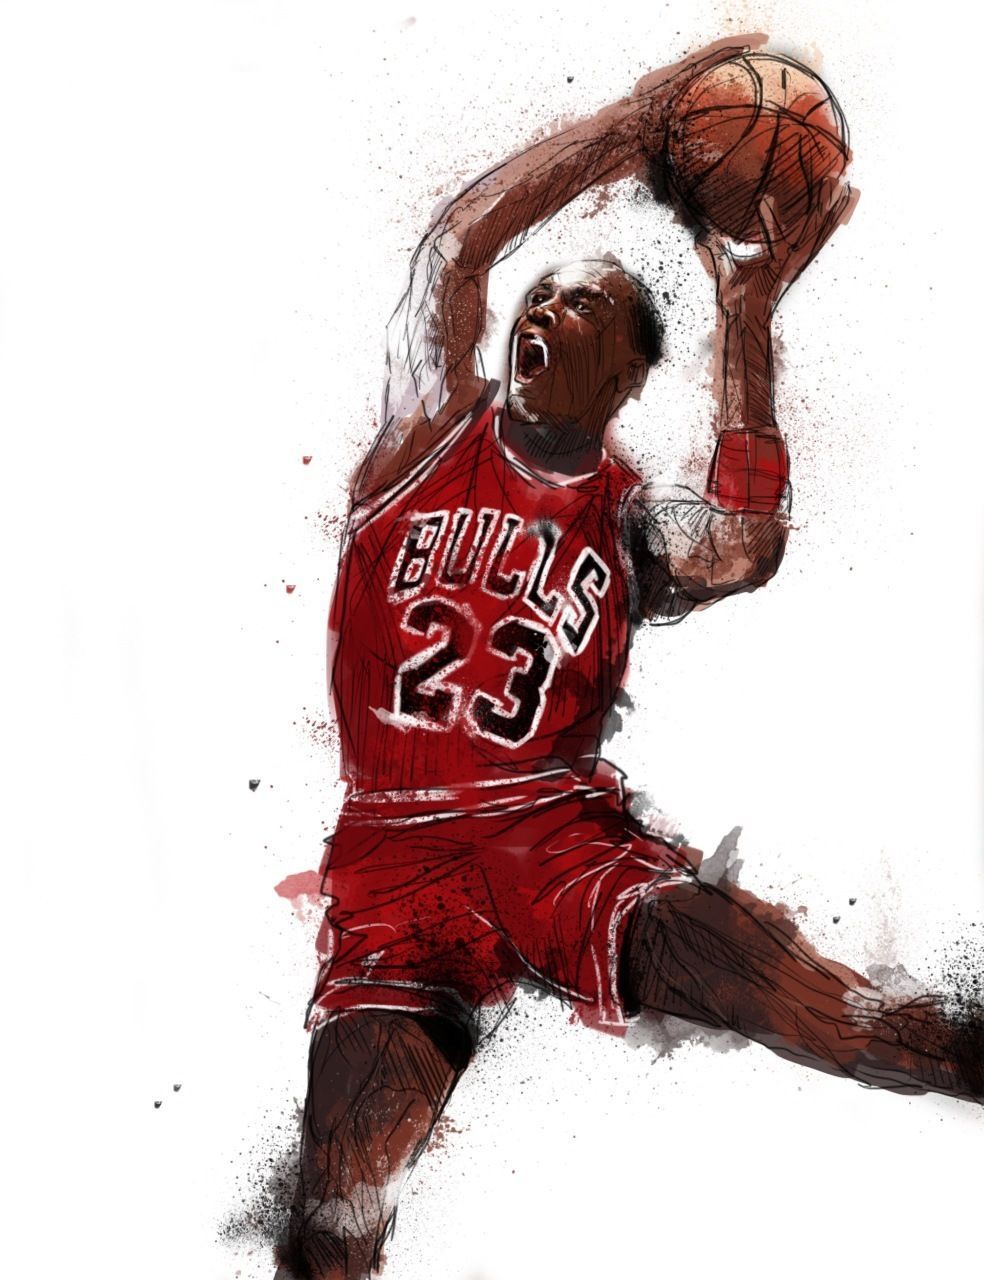 Wallpaper ID 1398341  people hd basketball 2K paintings jordan x  chicago bulls art kse digital michael free download